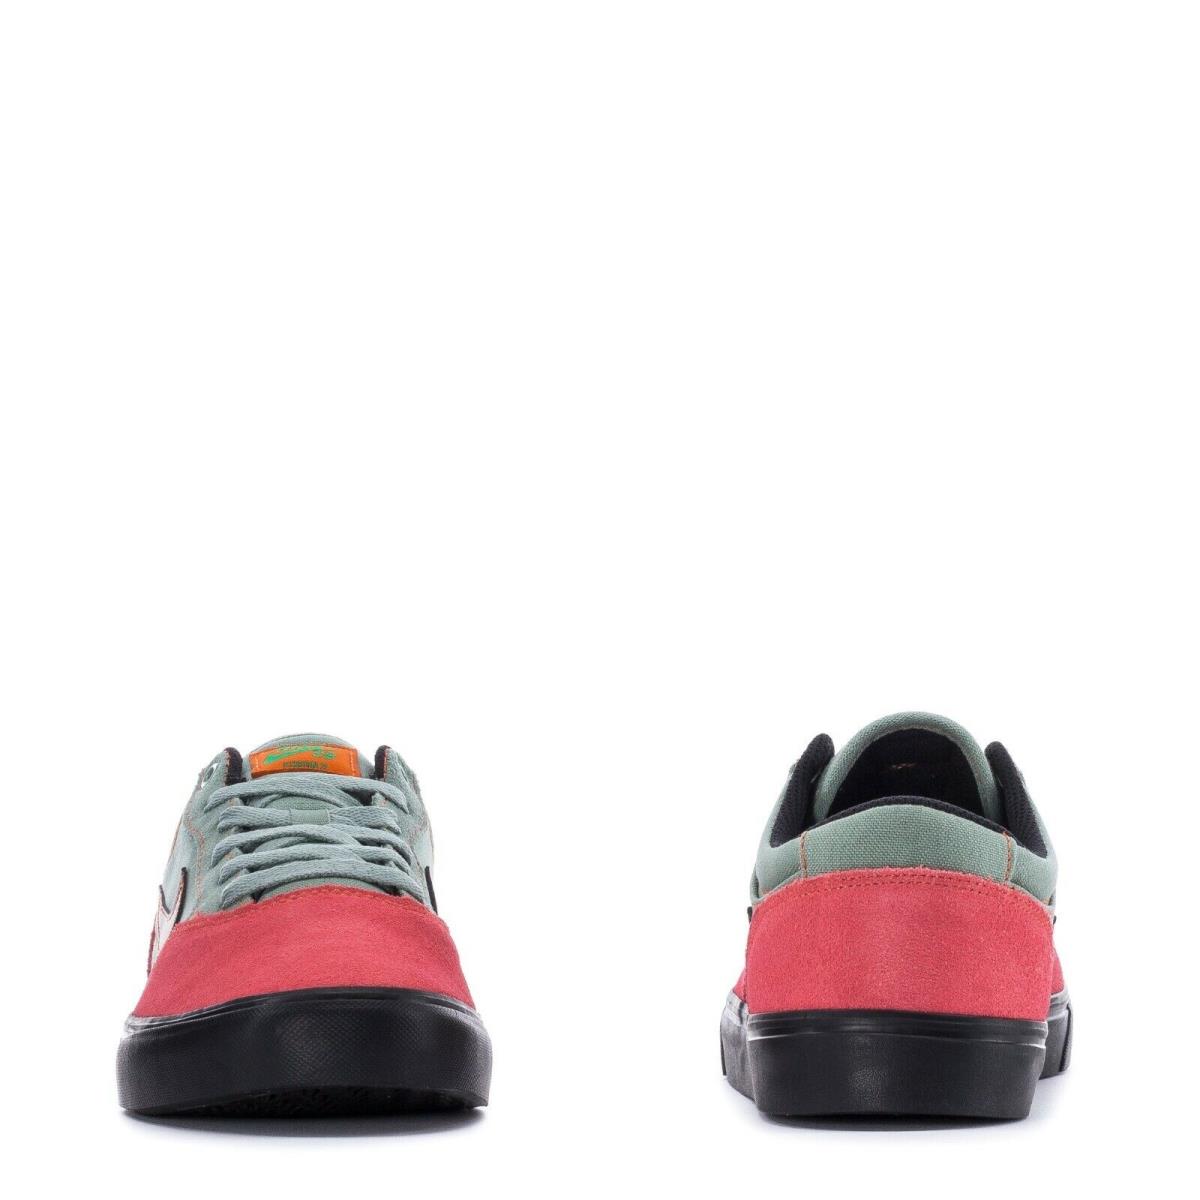 Nike shoes Chron - Multicolor 2